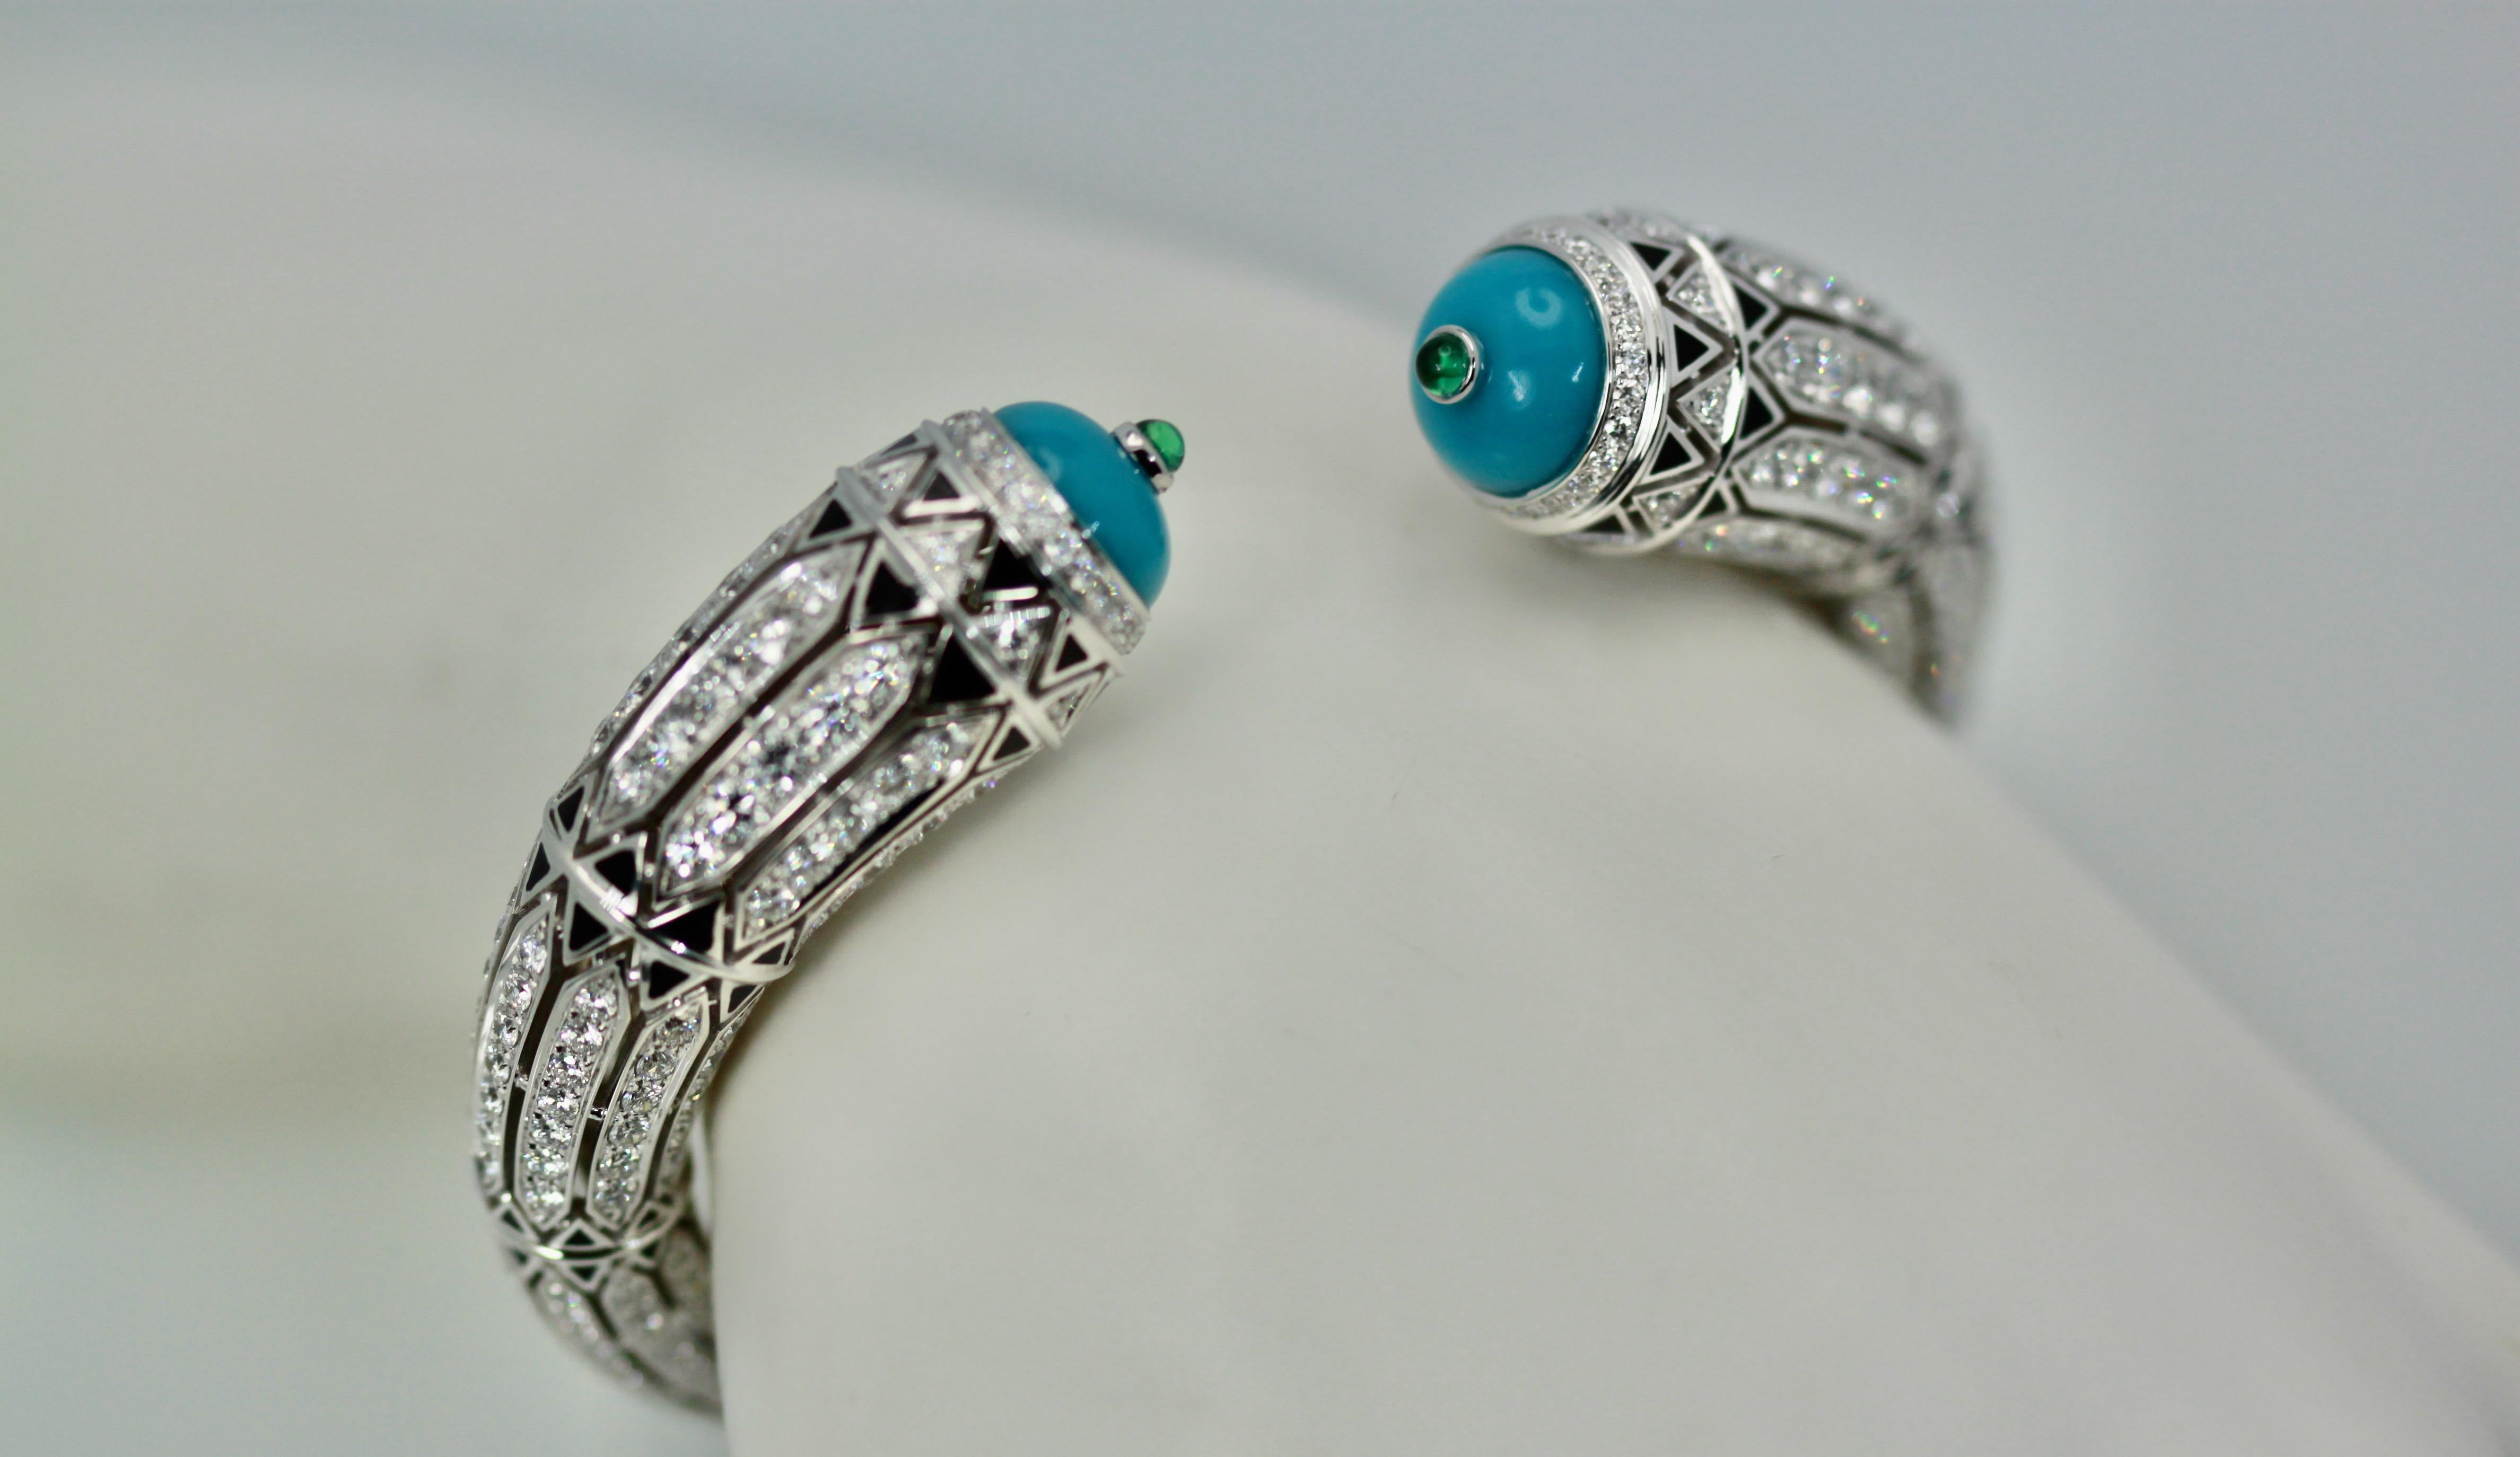 Art Deco Cartier High Jewelry Diamond Turquoise Bracelet Deco Inspired 12.73 Carat